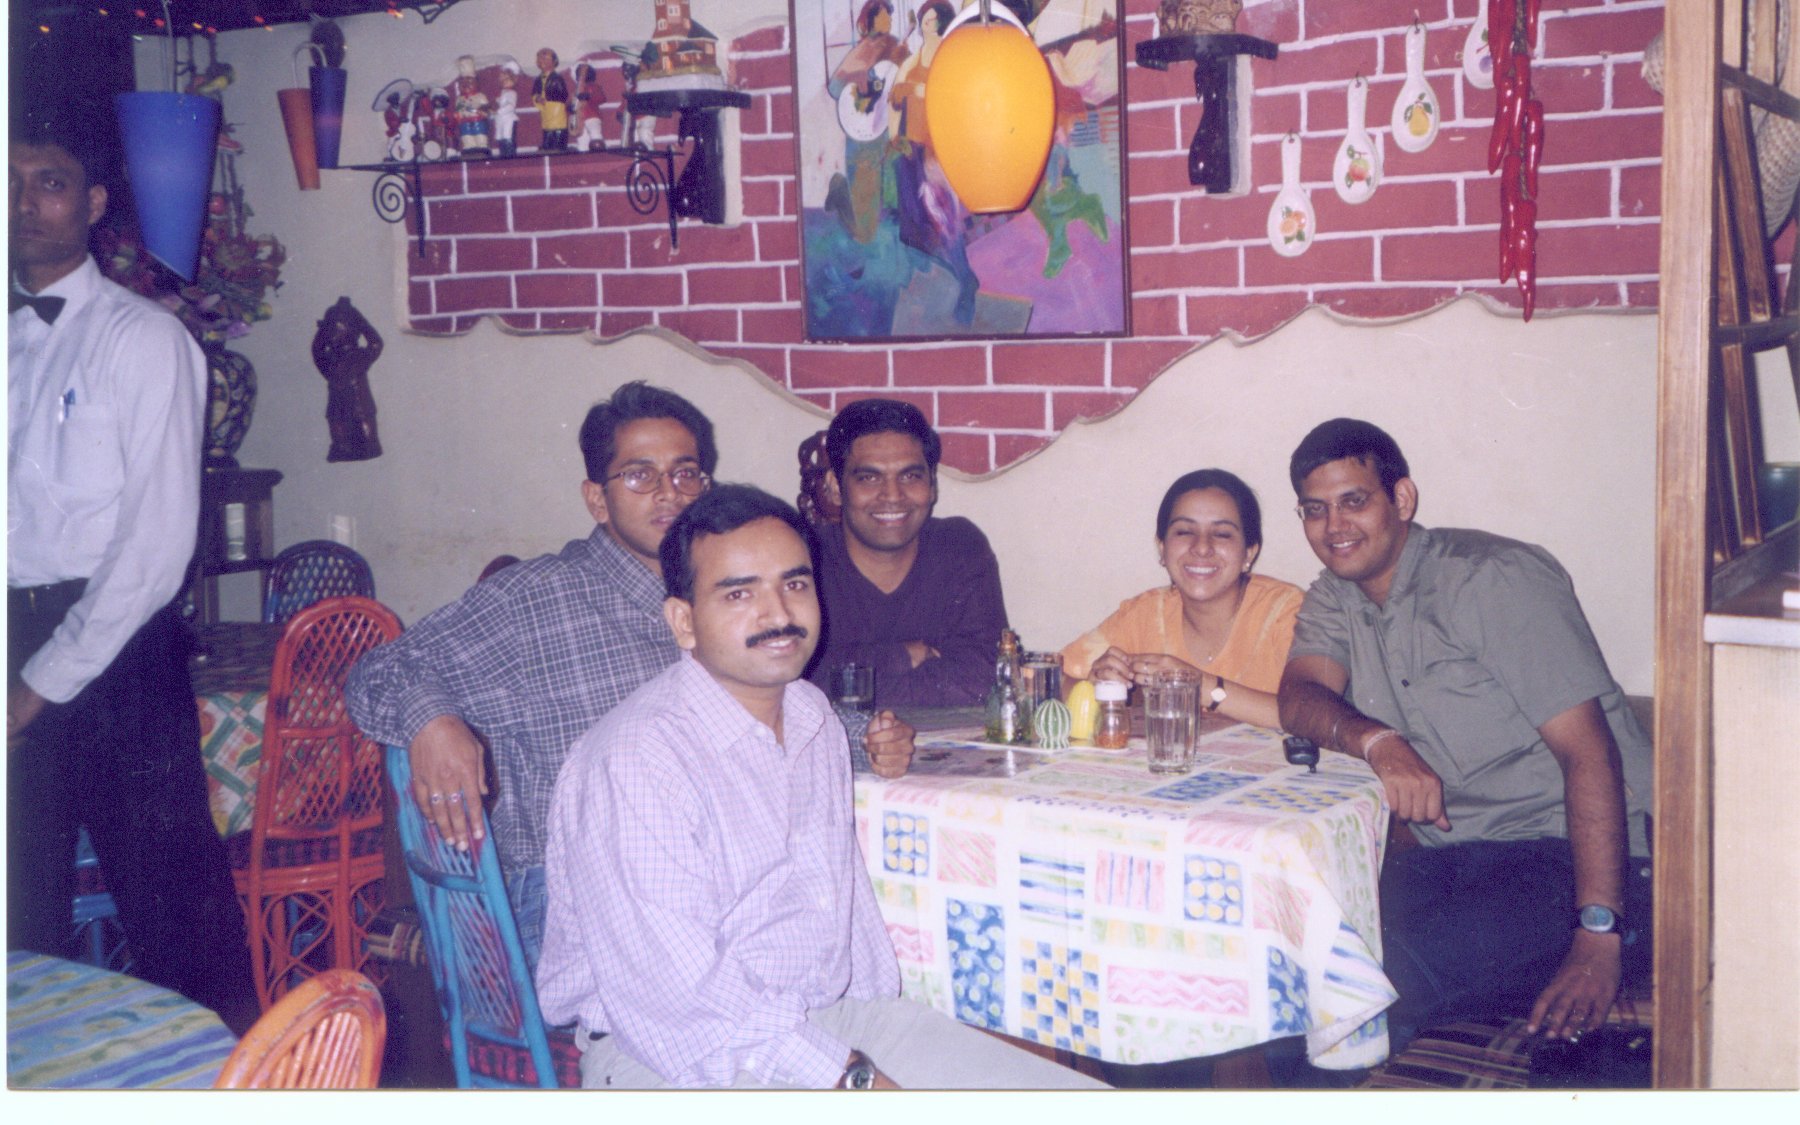 Rupa, Narveer, Raj, Kamal, Kiran and myself at a dinner in Kurry clucb, Kolkata.